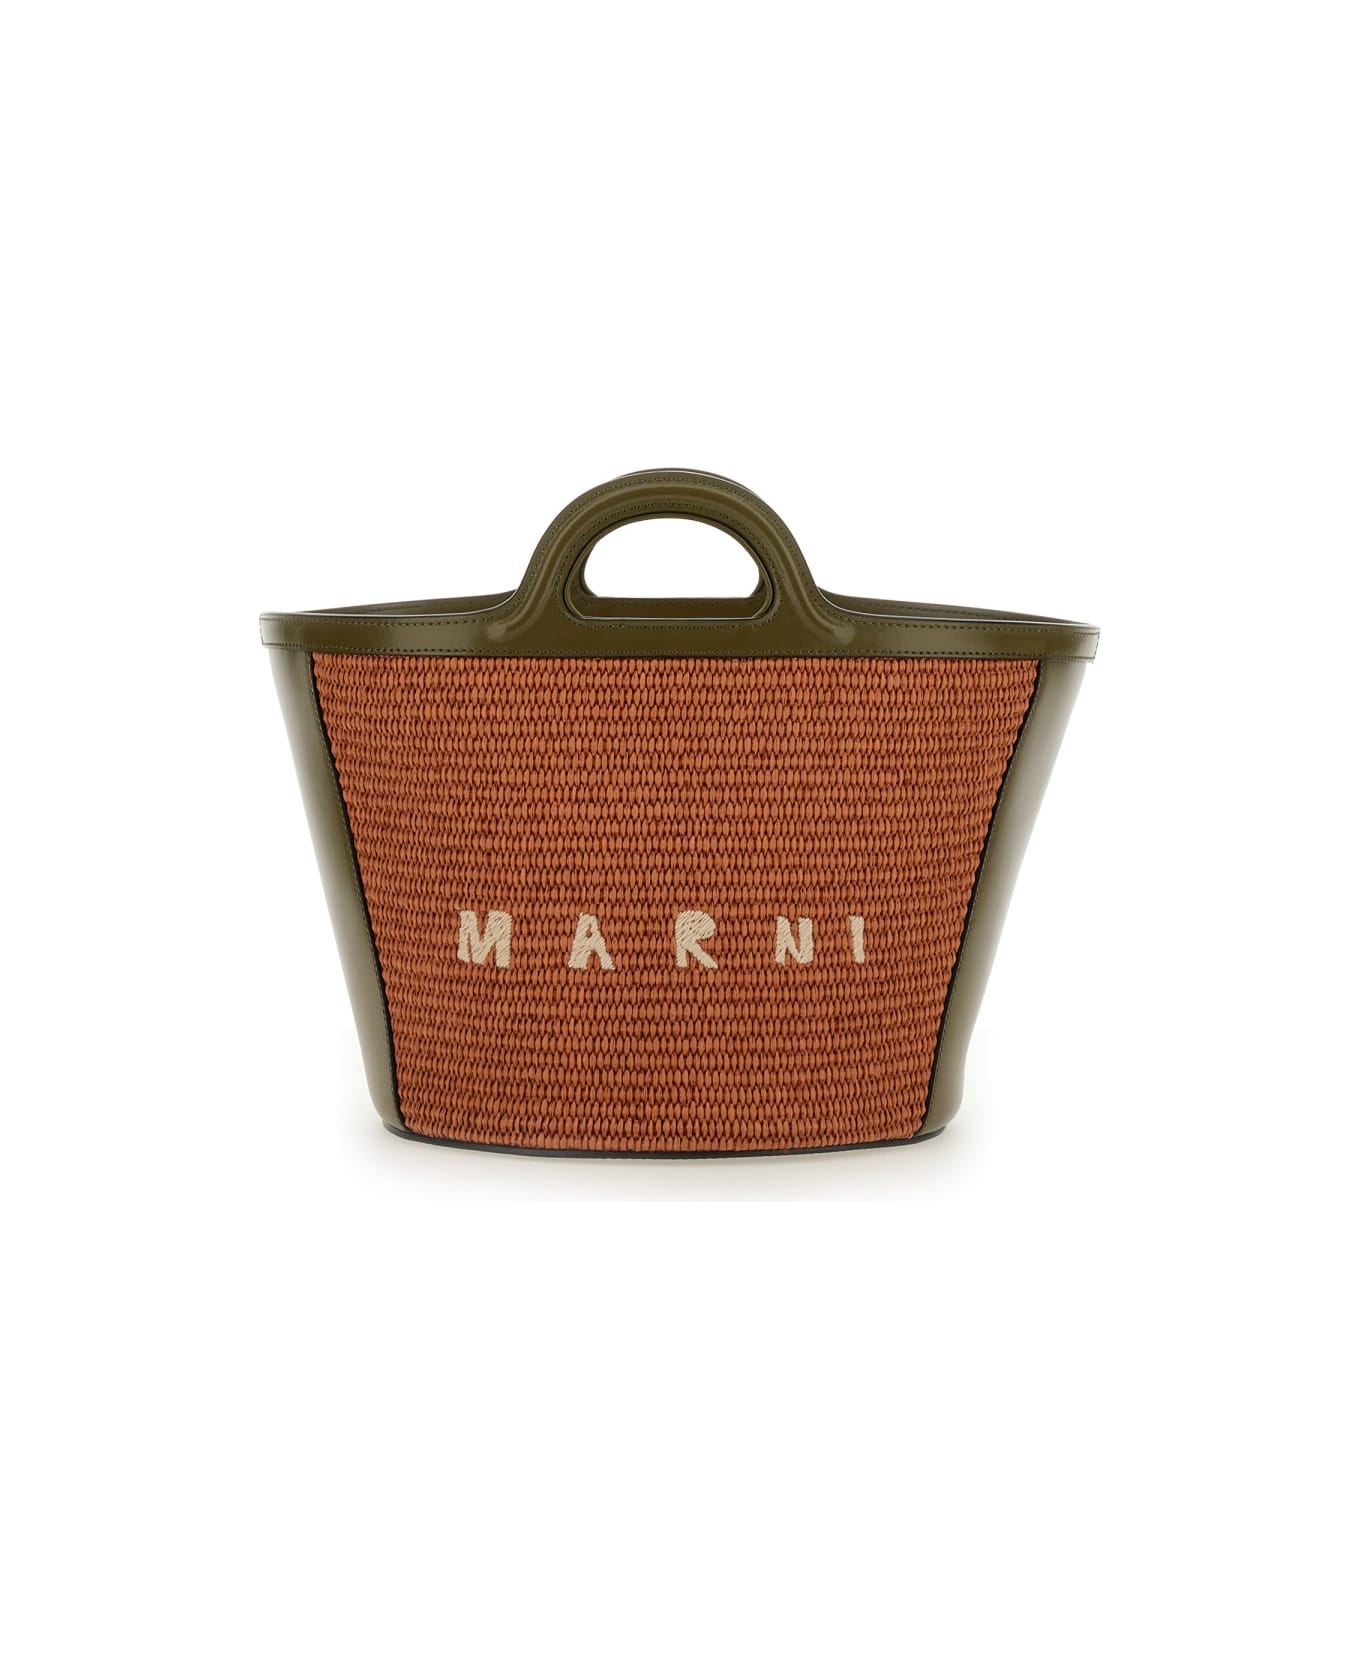 Marni Tropicalia Small Bag - Brick Red